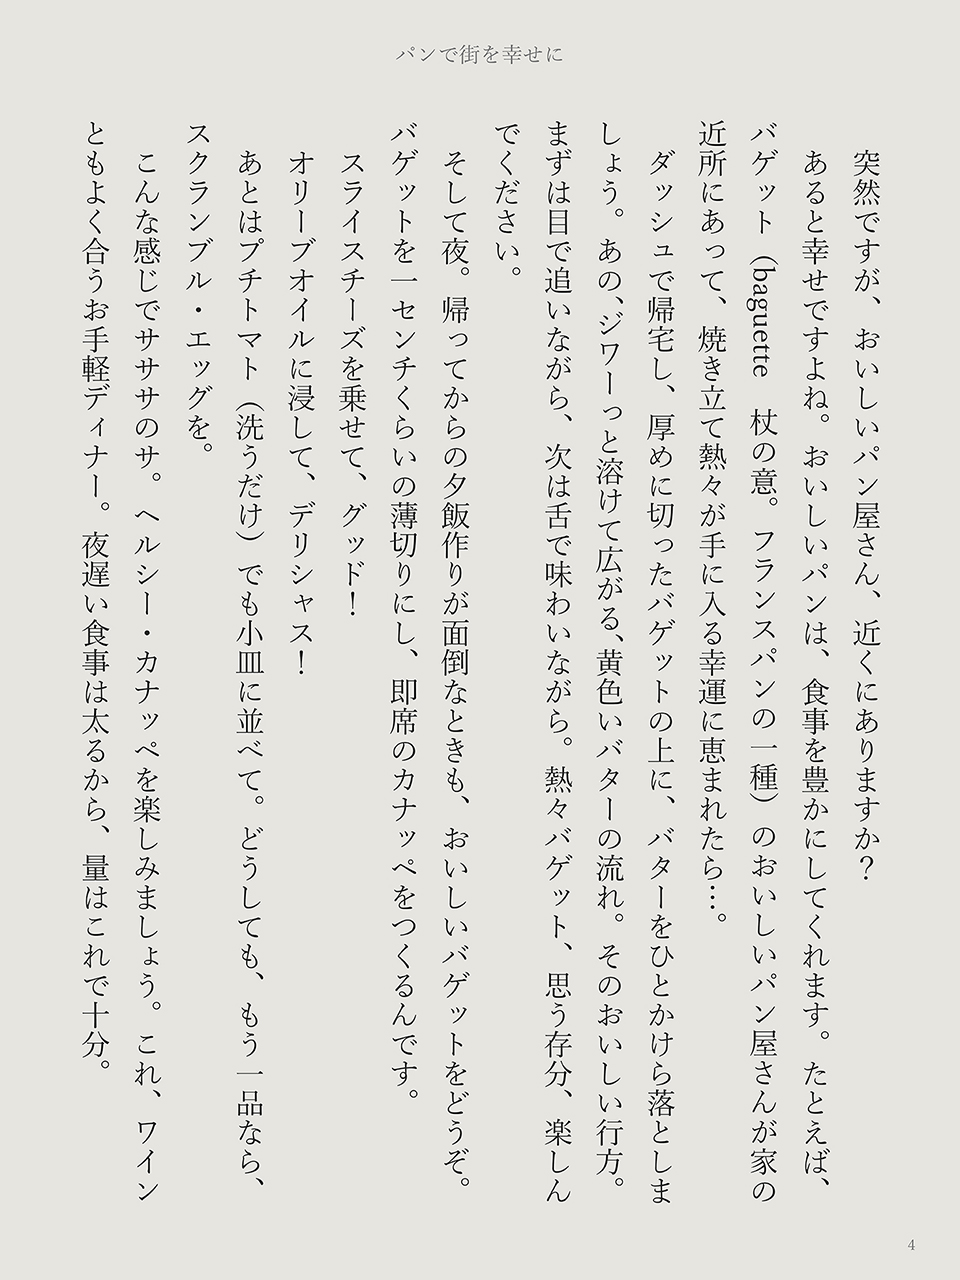 marketing 1coin series(3)『パンで街を幸せに』（矢嶋ストーリー発行、矢嶋剛・著）のページです。文庫本スタイルで組んだ初めてのページです。